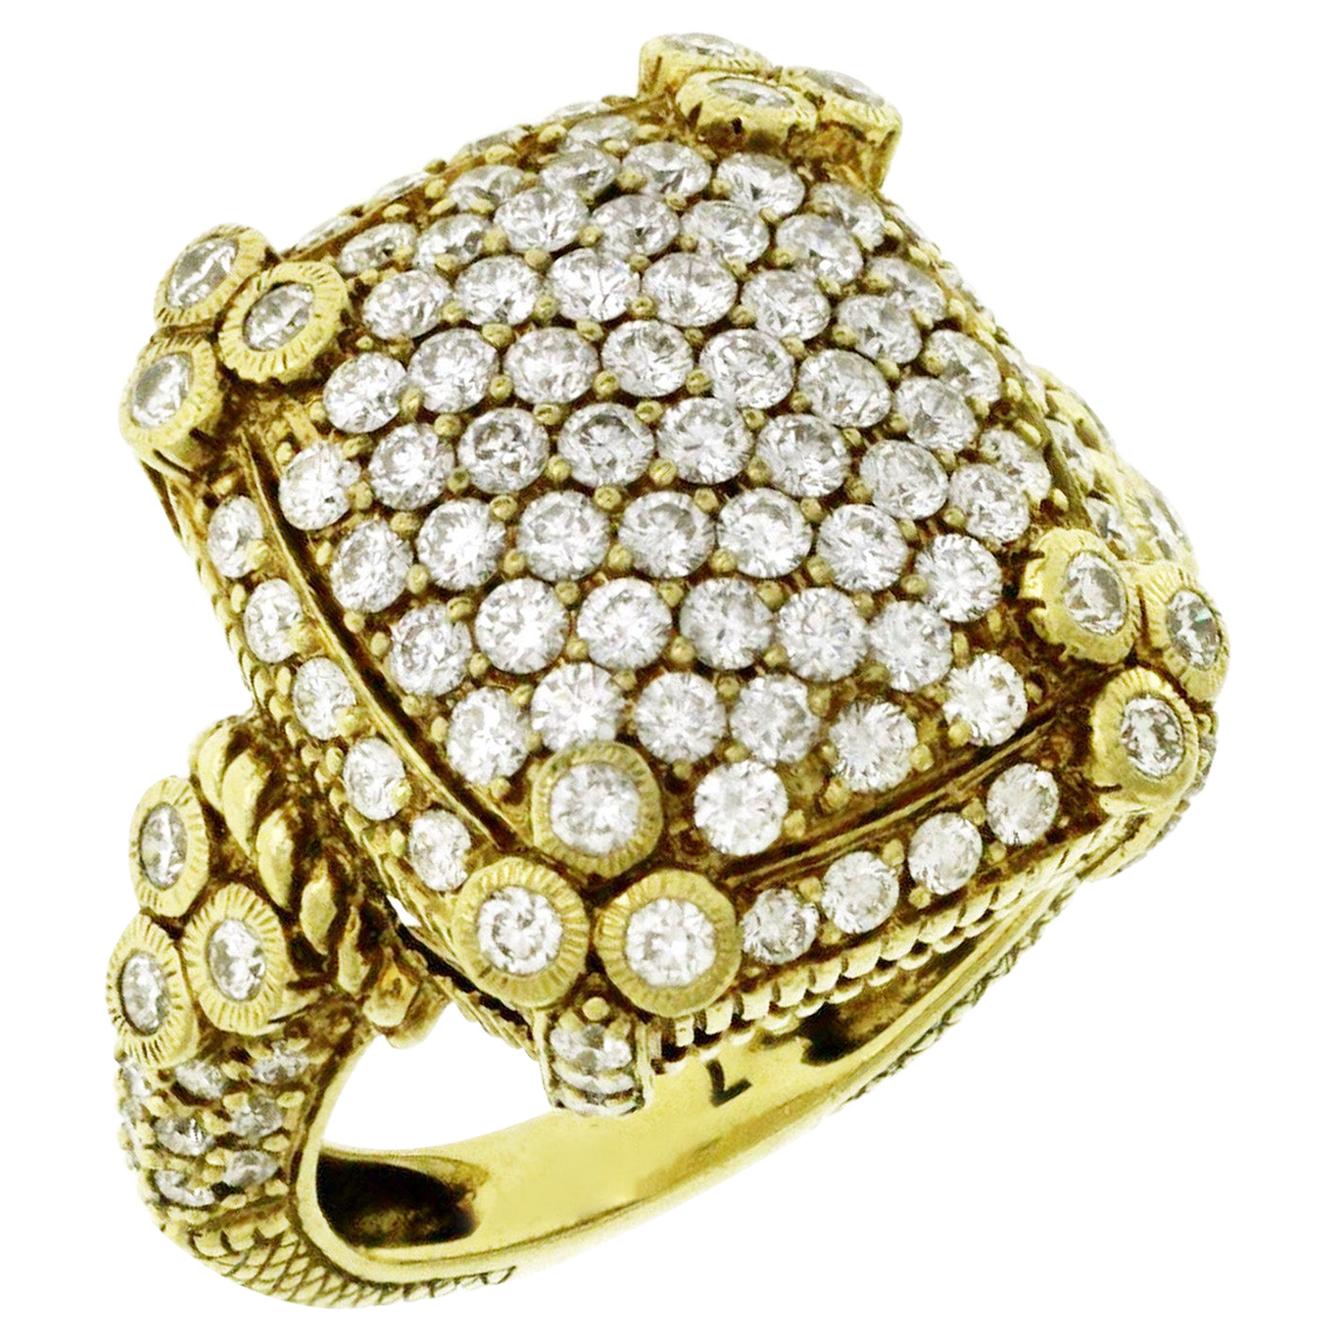 Authentic Judith Ripka 18 Karat Yellow Pave 2.70 Carat Diamond Ring